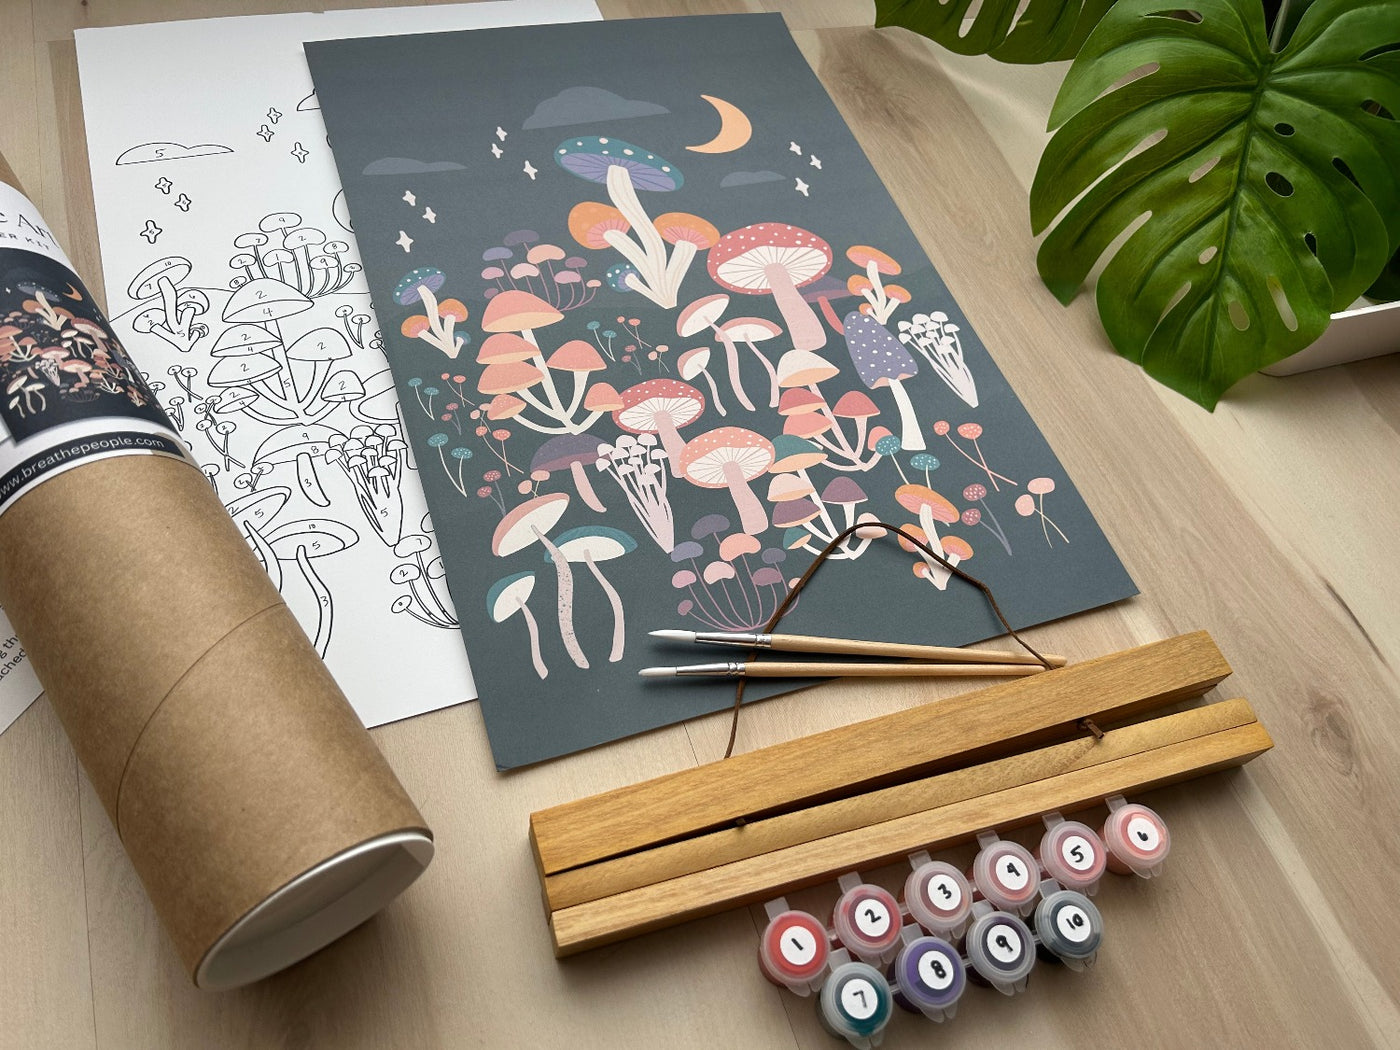 Night Mushrooms Meditative Art Paint-by-Number Kit